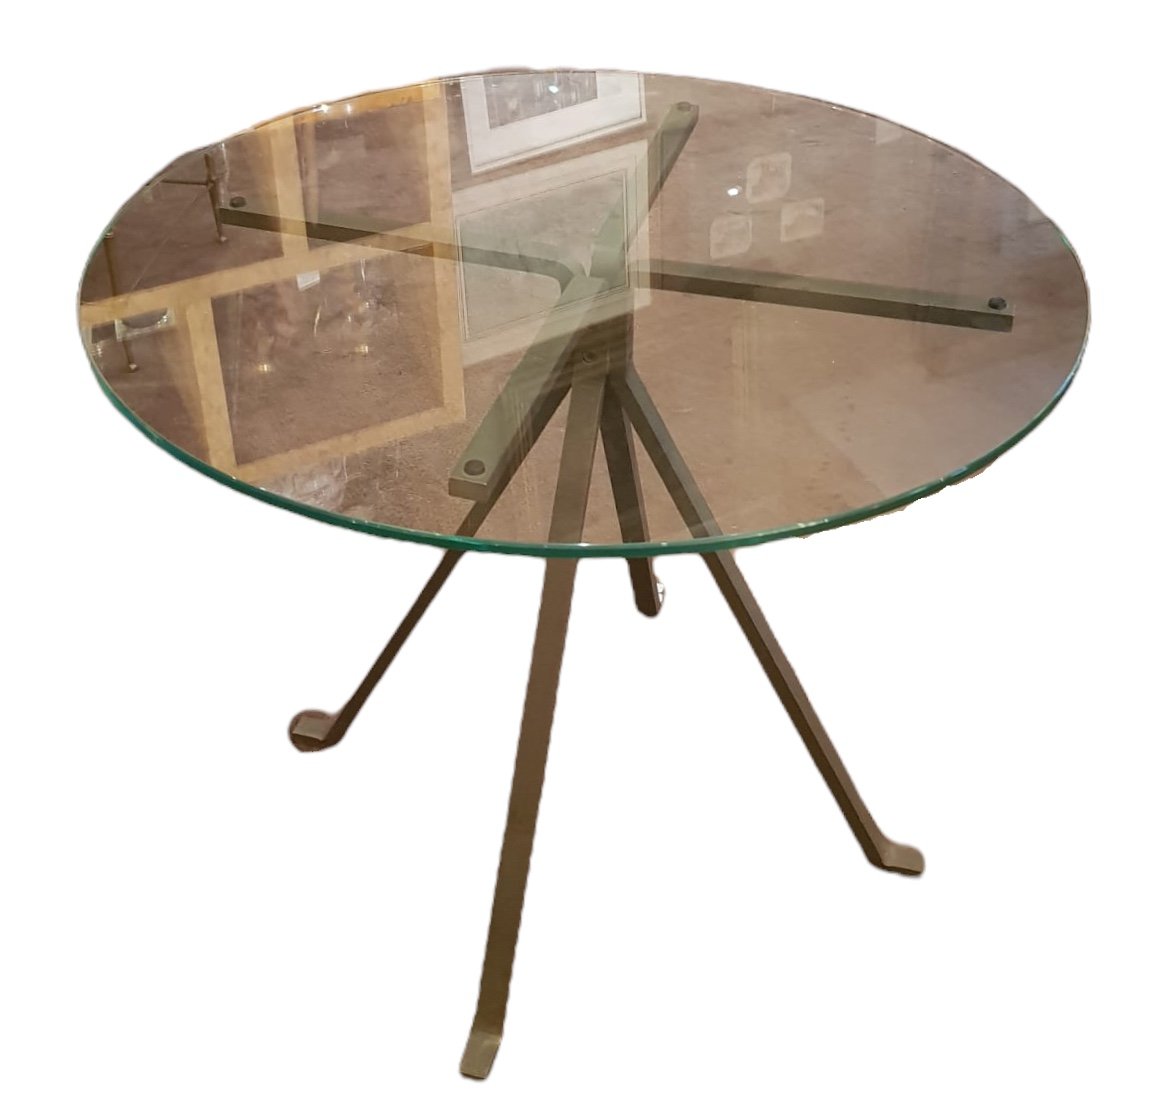 Enzo Mari (1932-2020) For Driade, Cugino Pedestal Table, Glass And Metal.